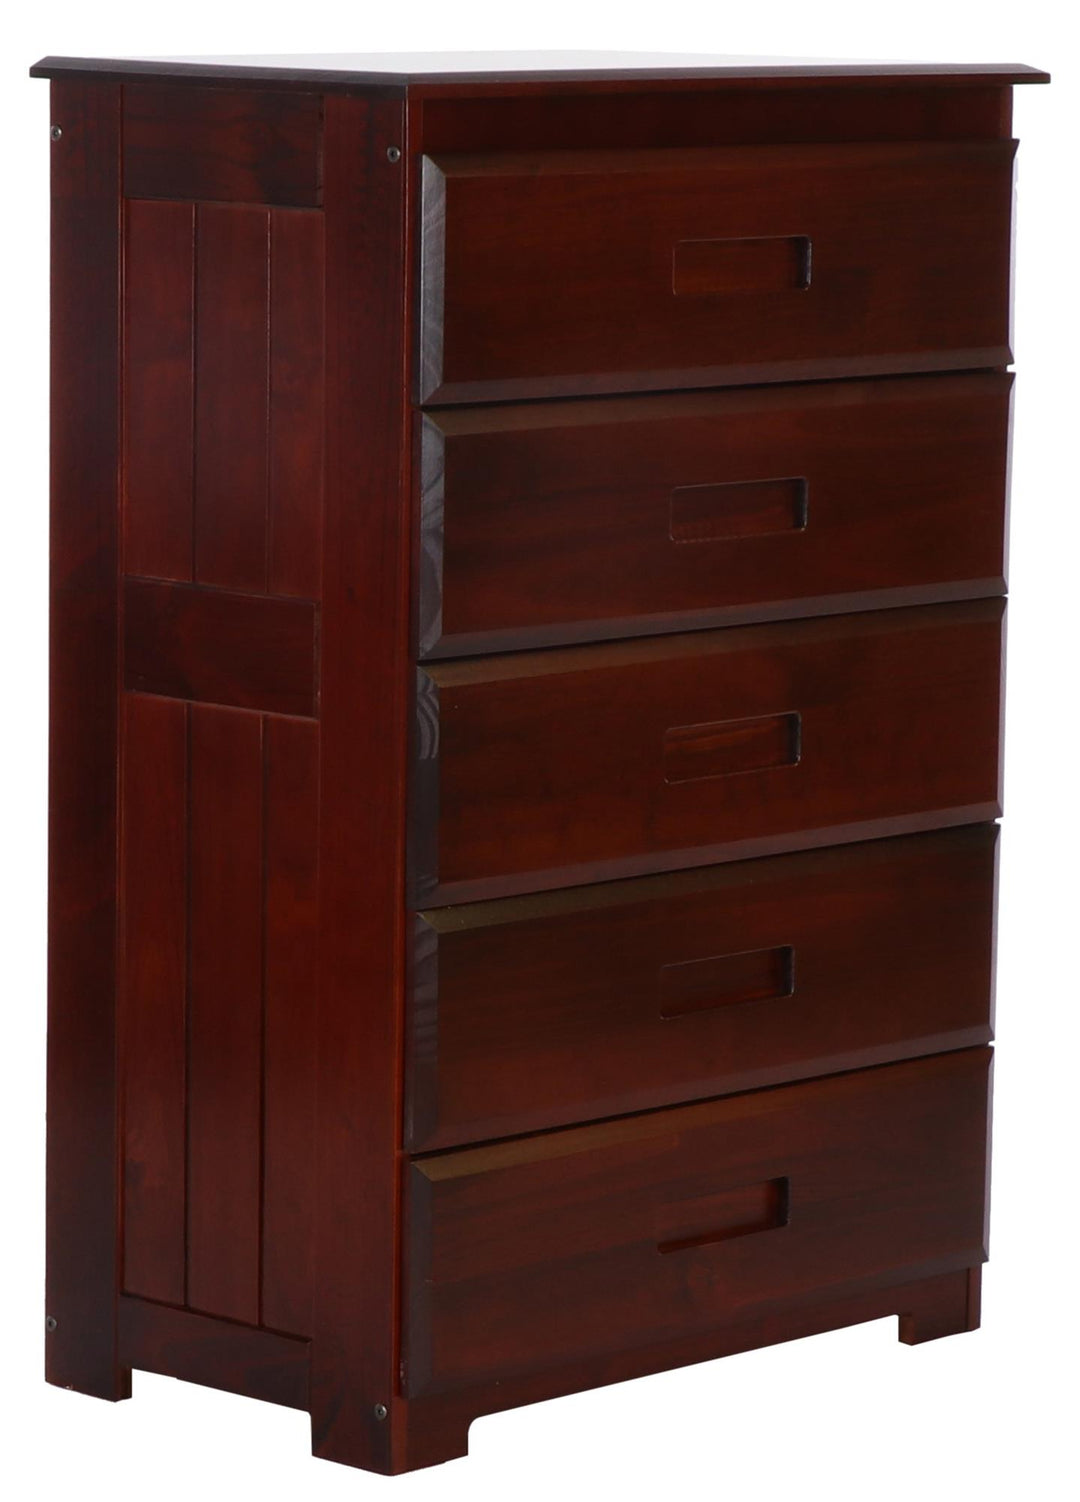 5-drawer wooden dresser tall - Honey